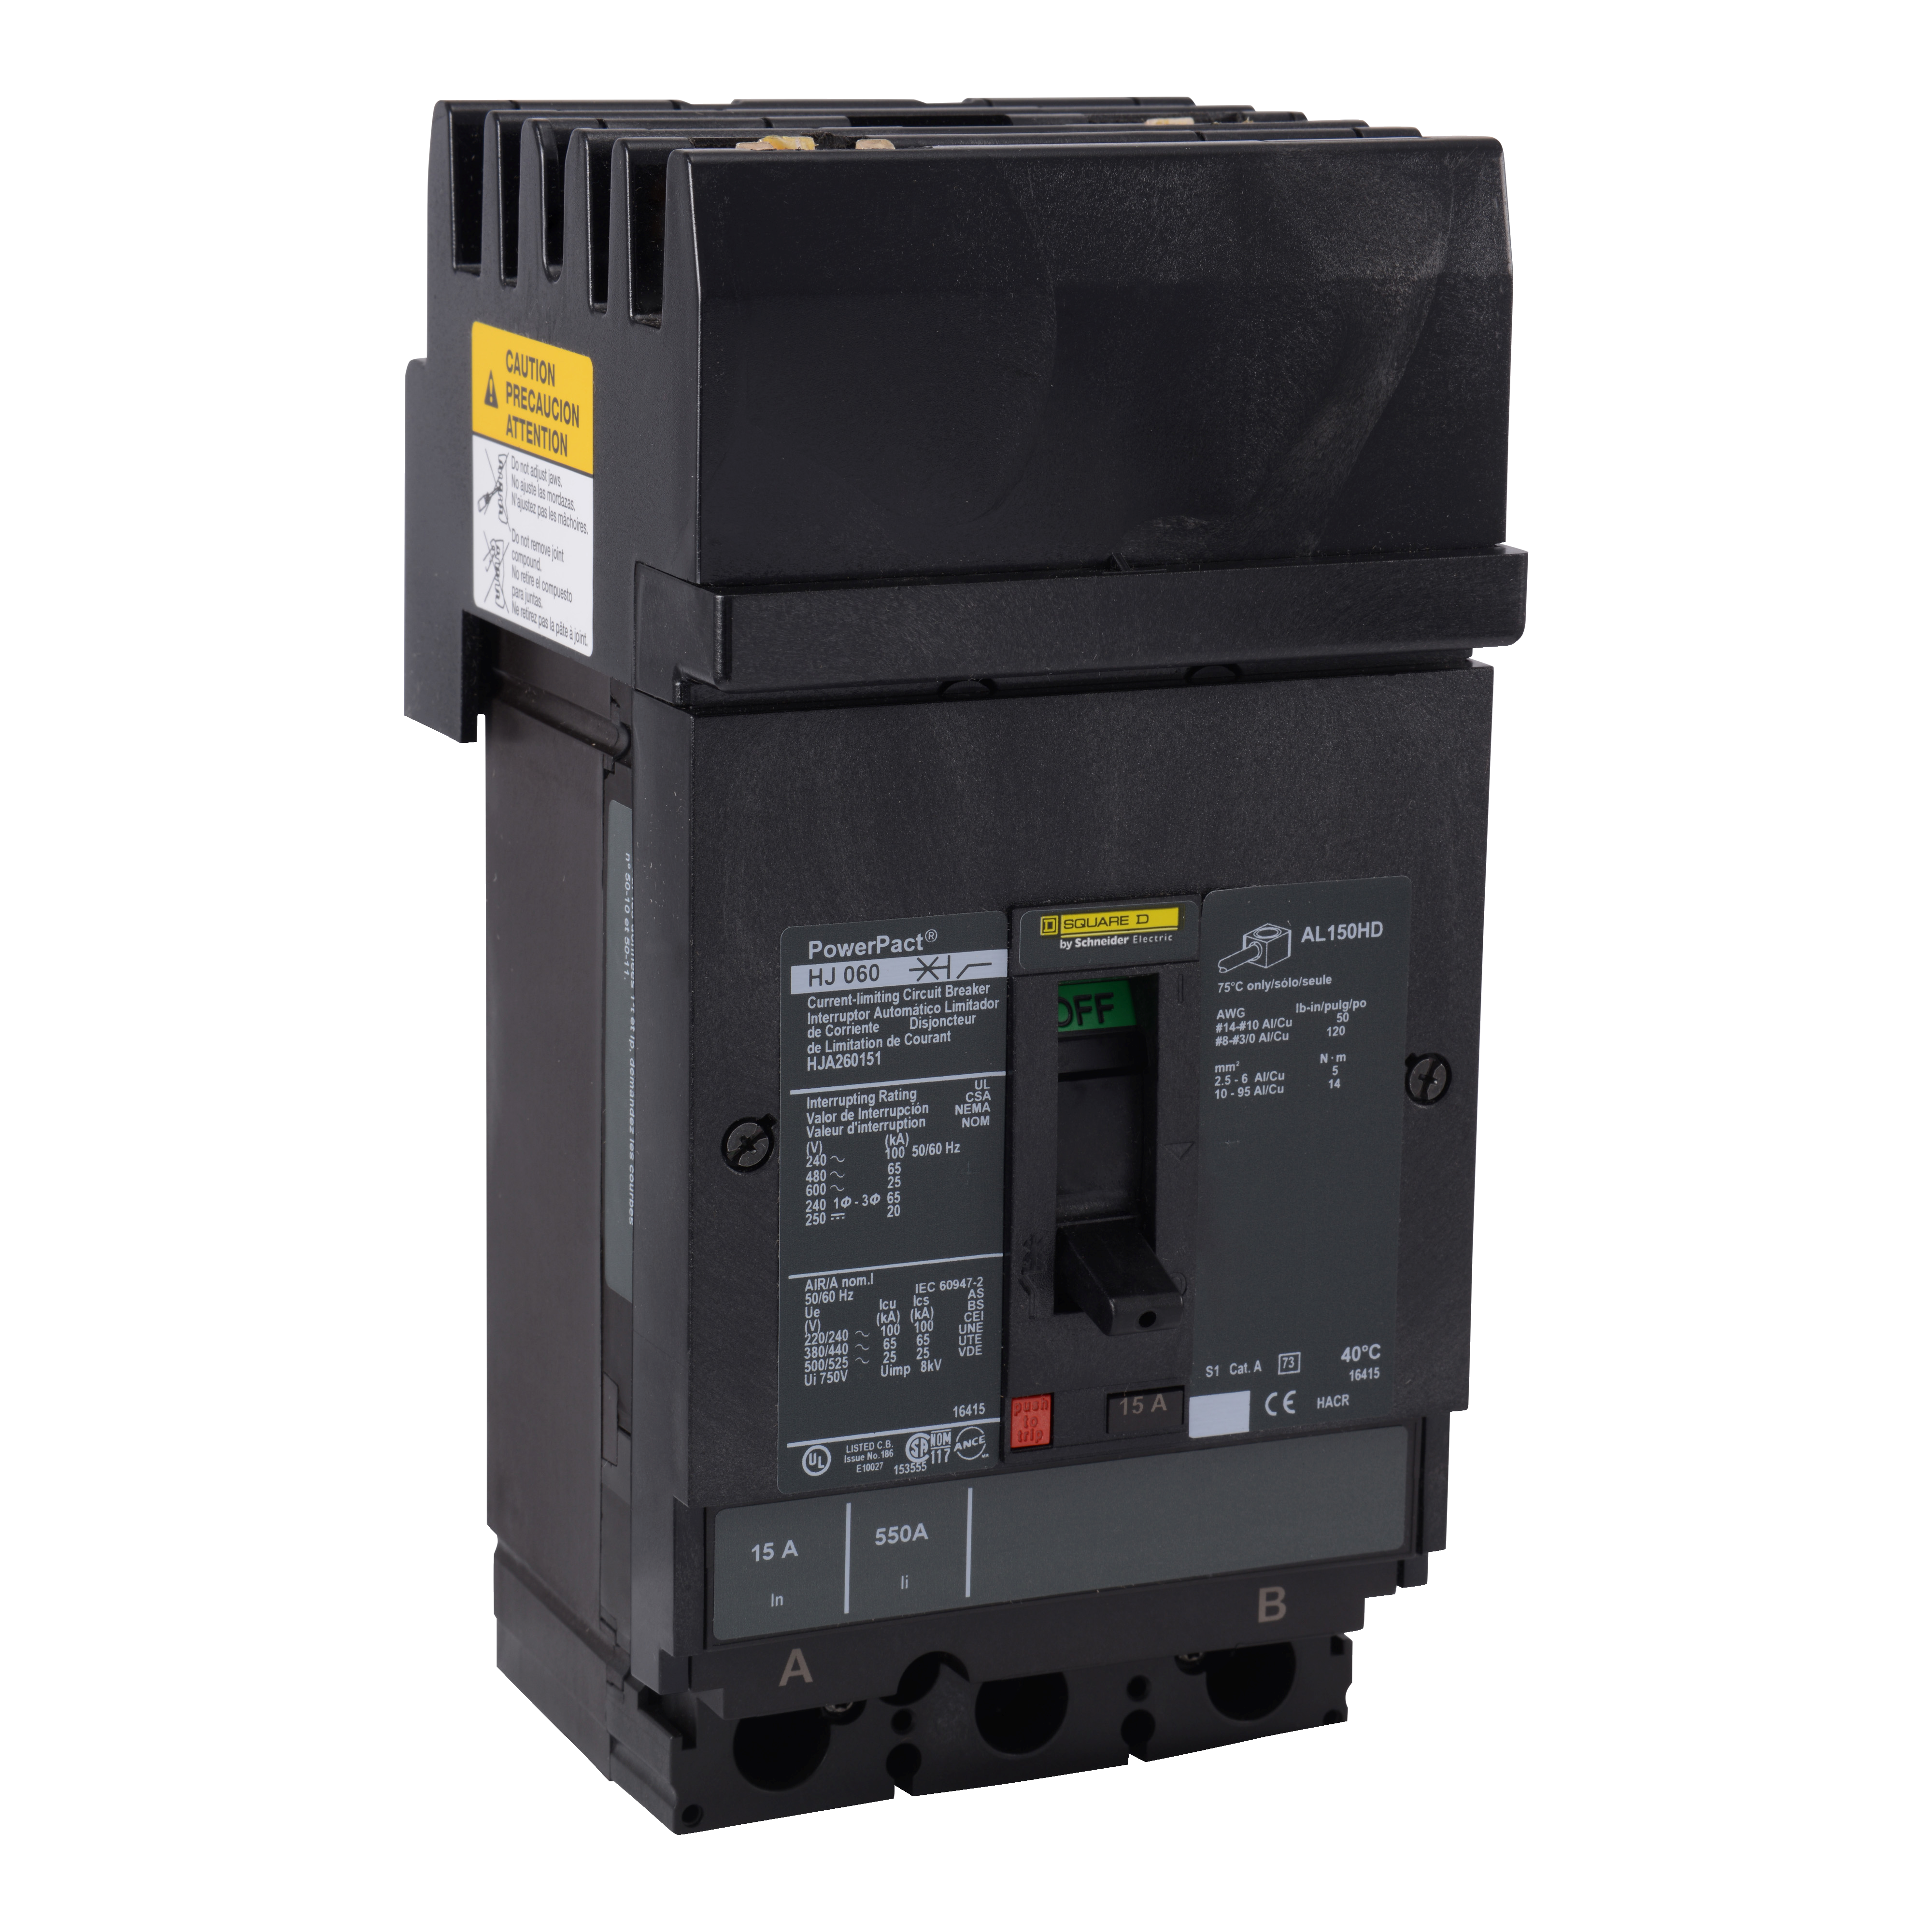 Circuit breaker, PowerPacT H, 70A, 2 pole, 600VAC, 25kA, I-Line, thermal magnetic, 80%, BC